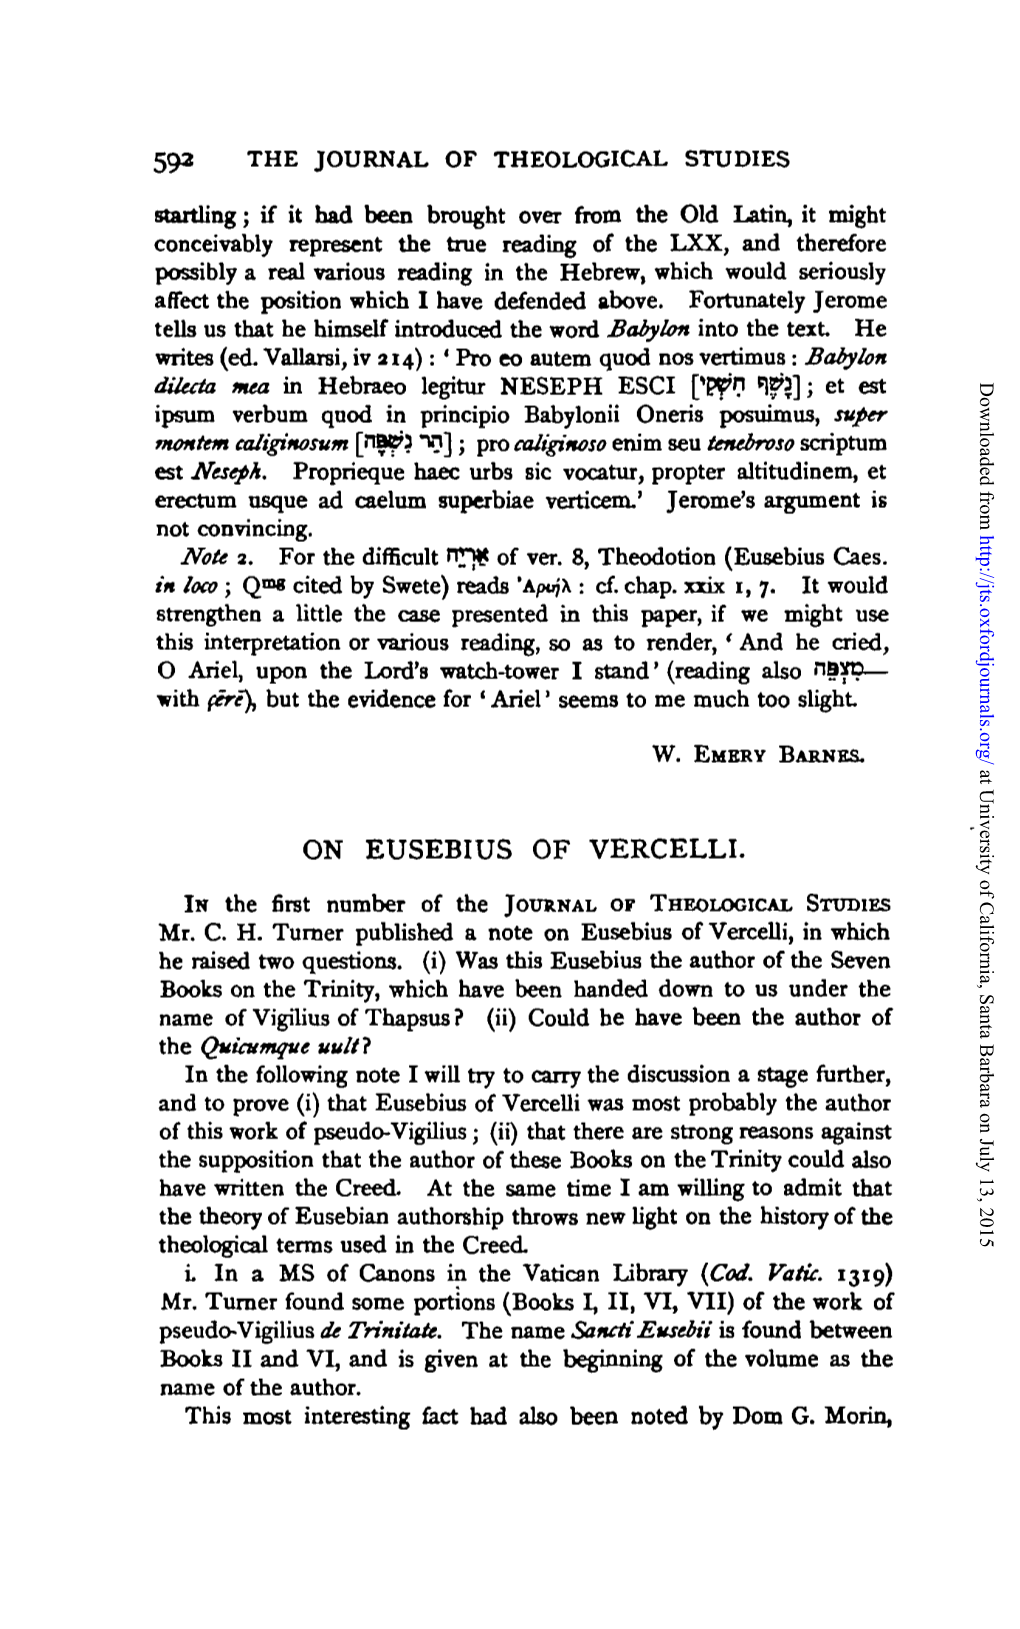 On Eusebius of Vercelli